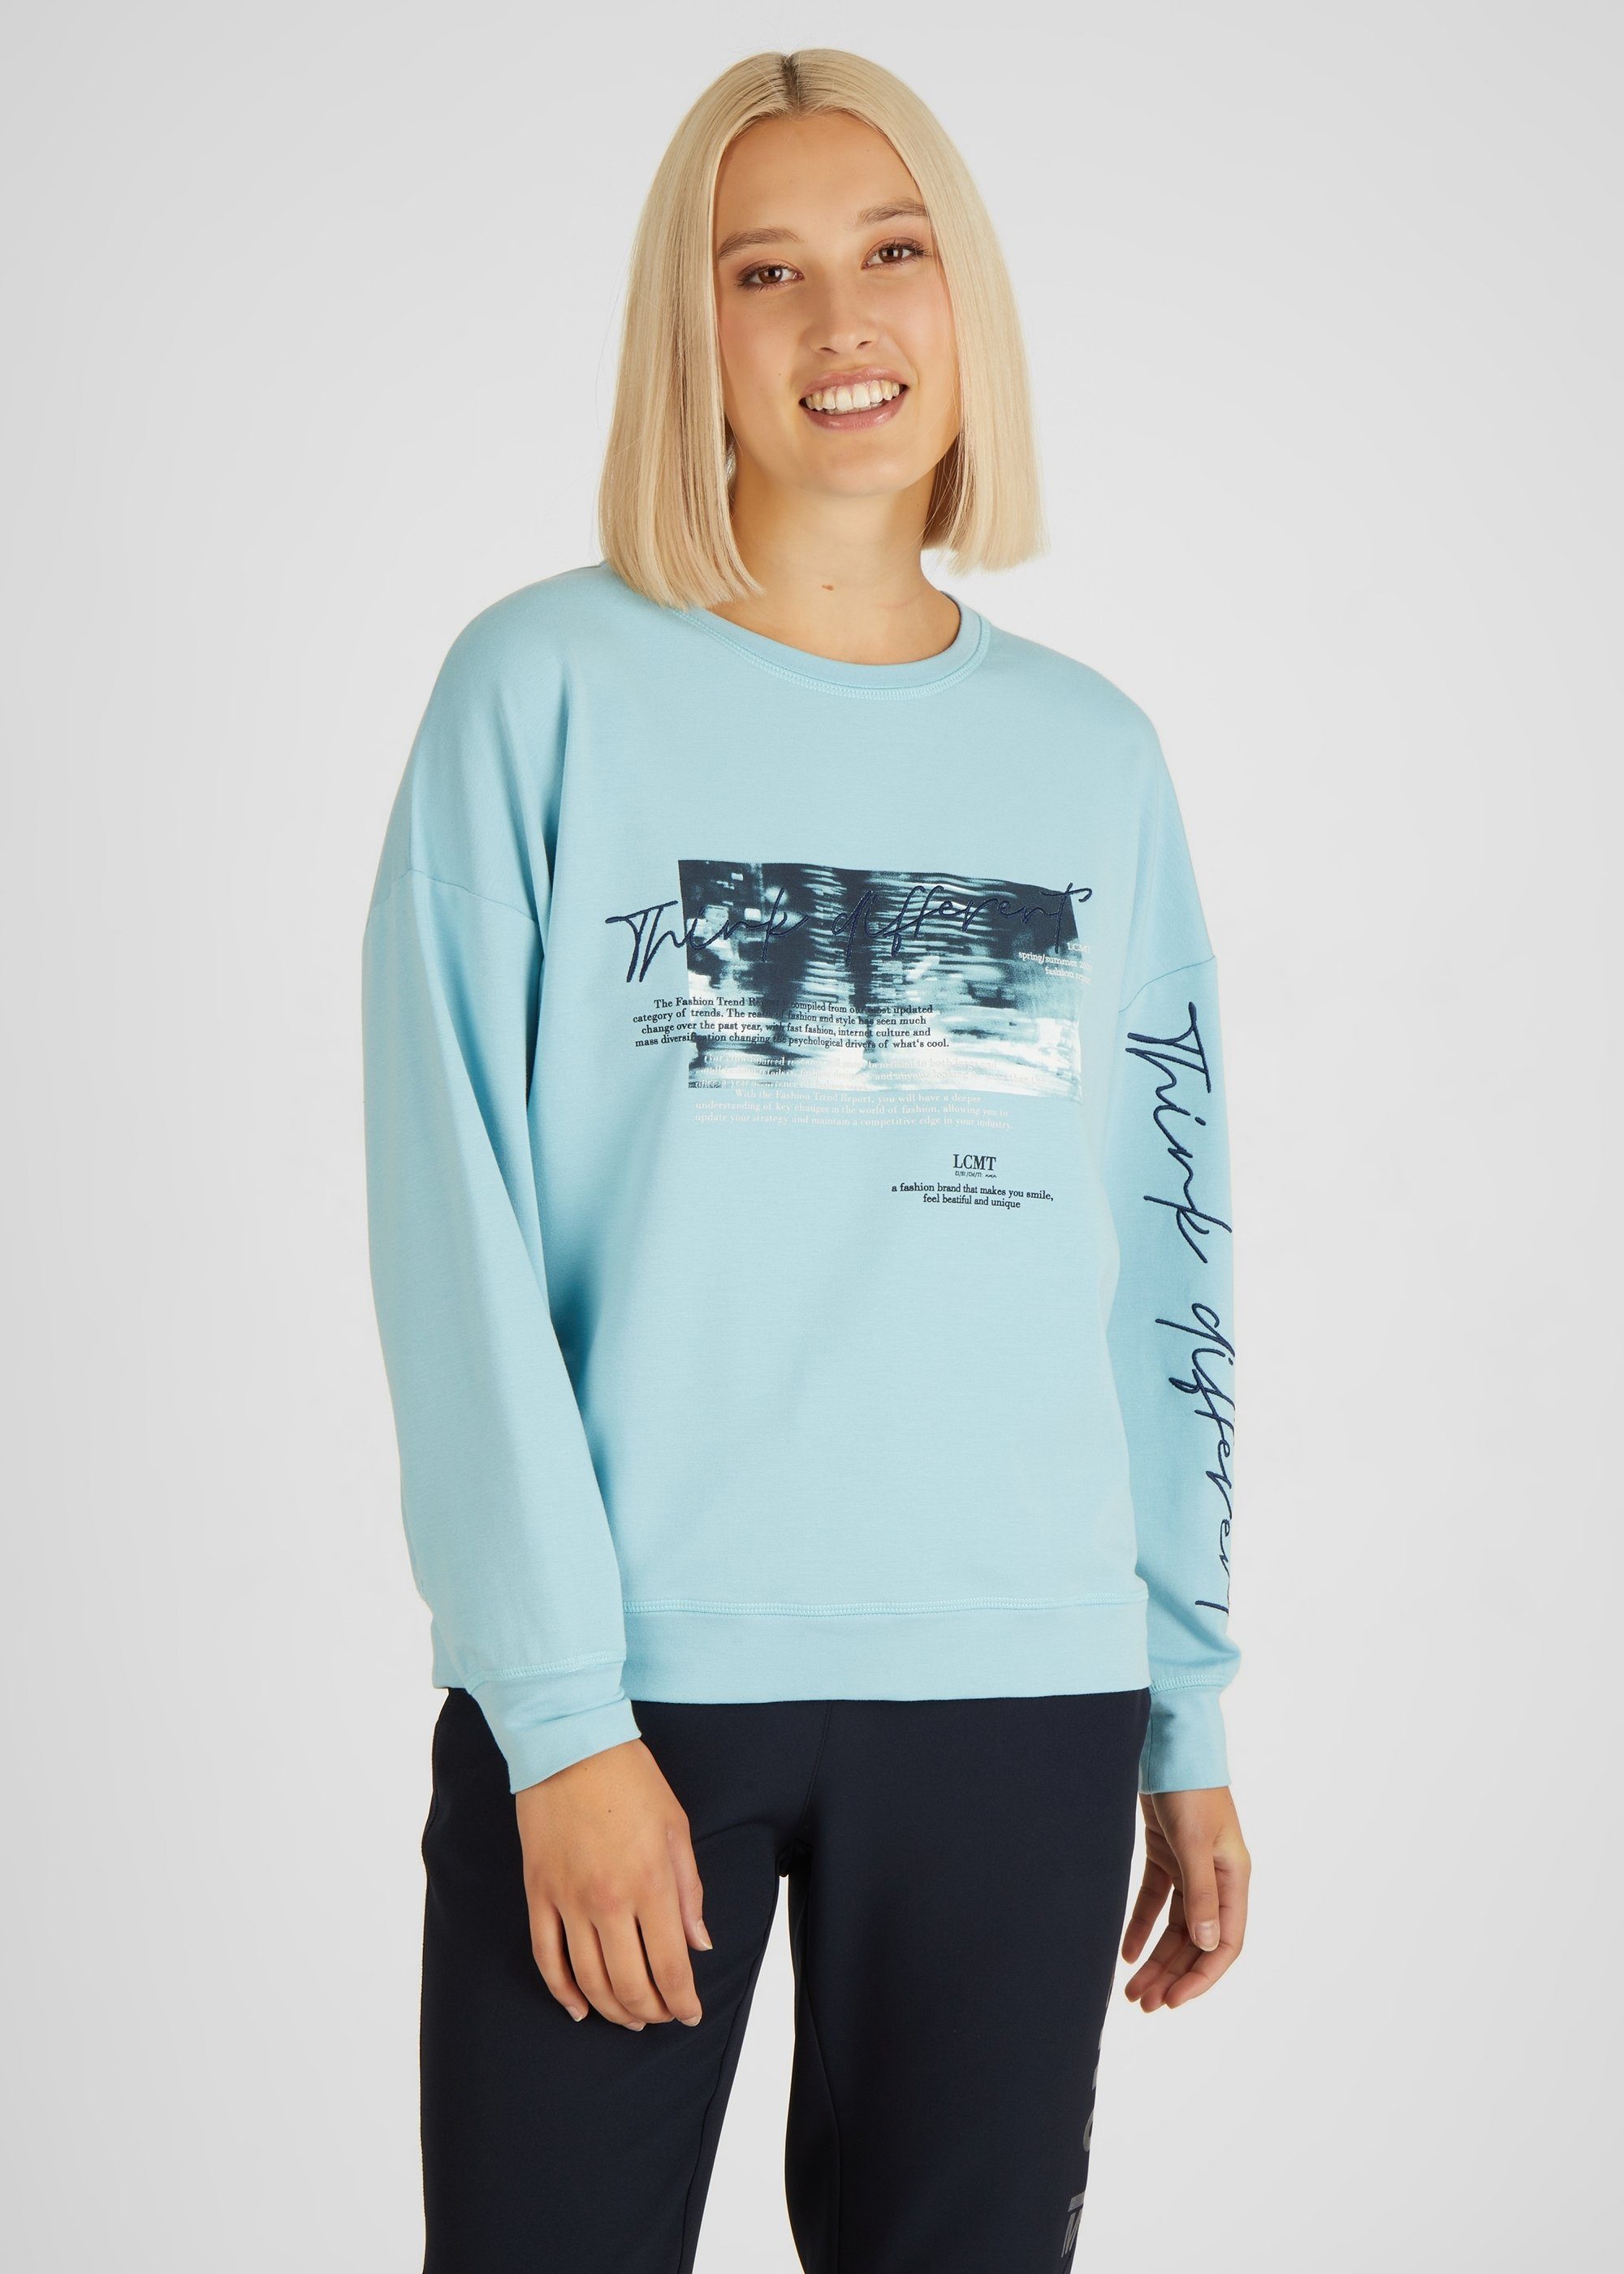 LeComte Sweatshirt online kaufen | OTTO